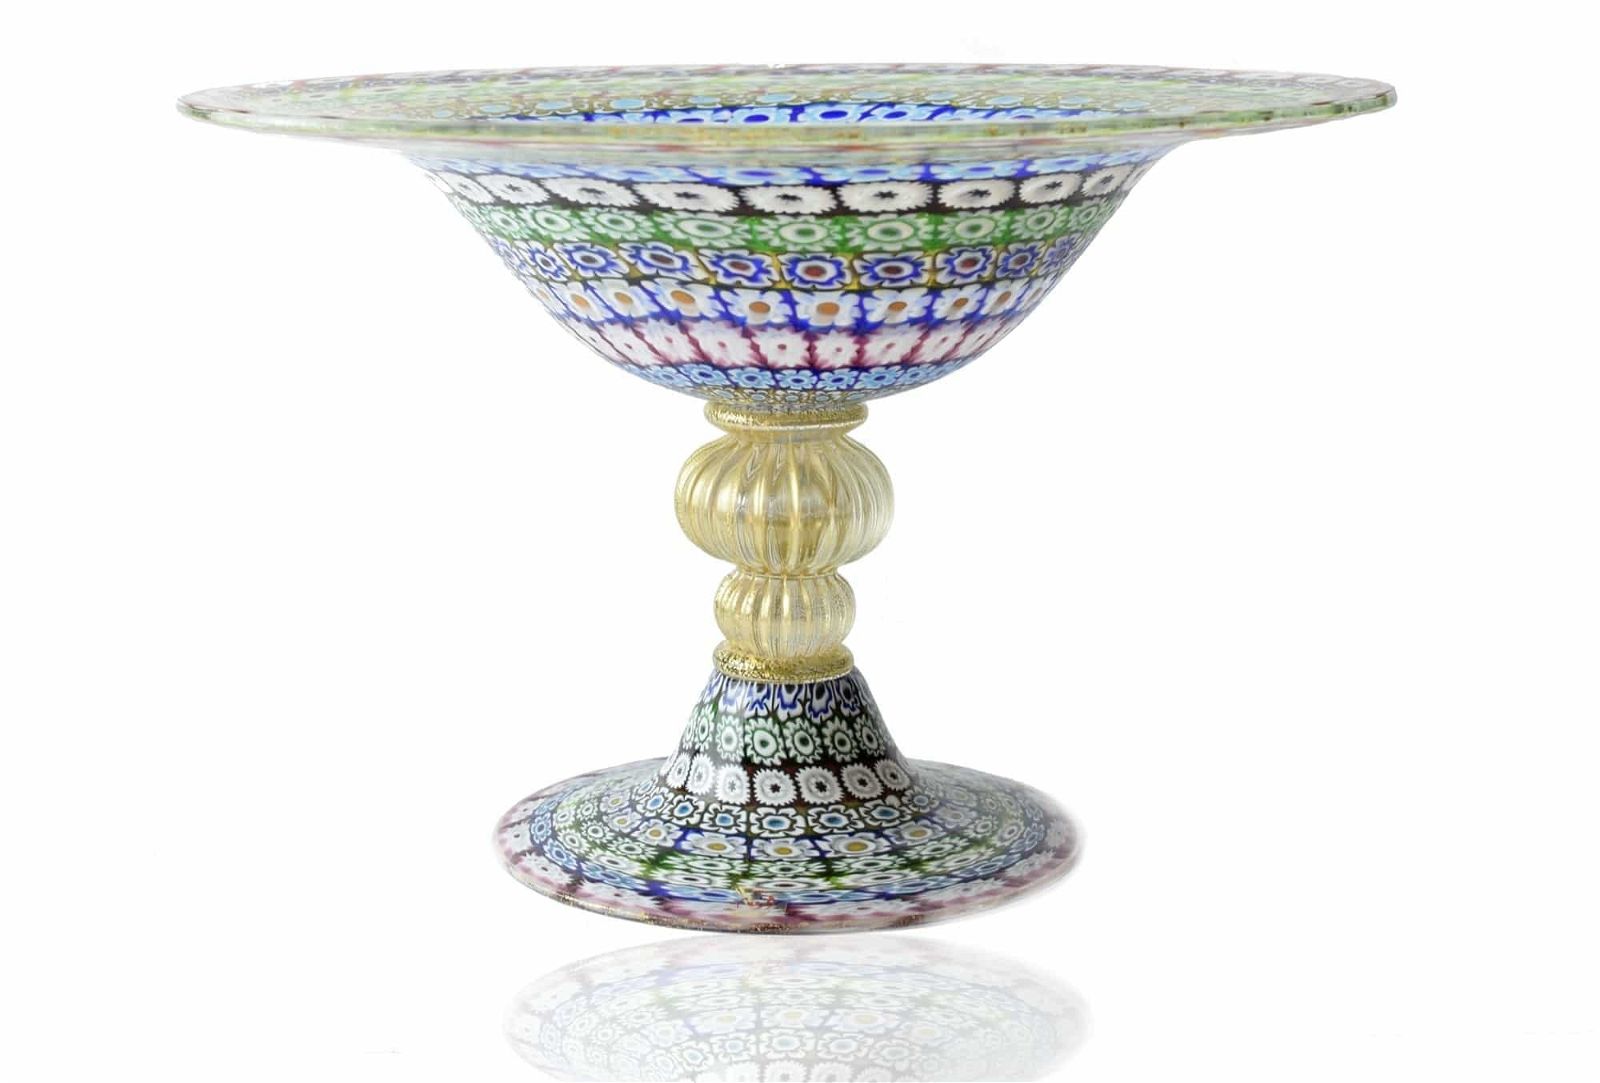 Explore the magic of Murano glass at Jasper52 Feb. 14